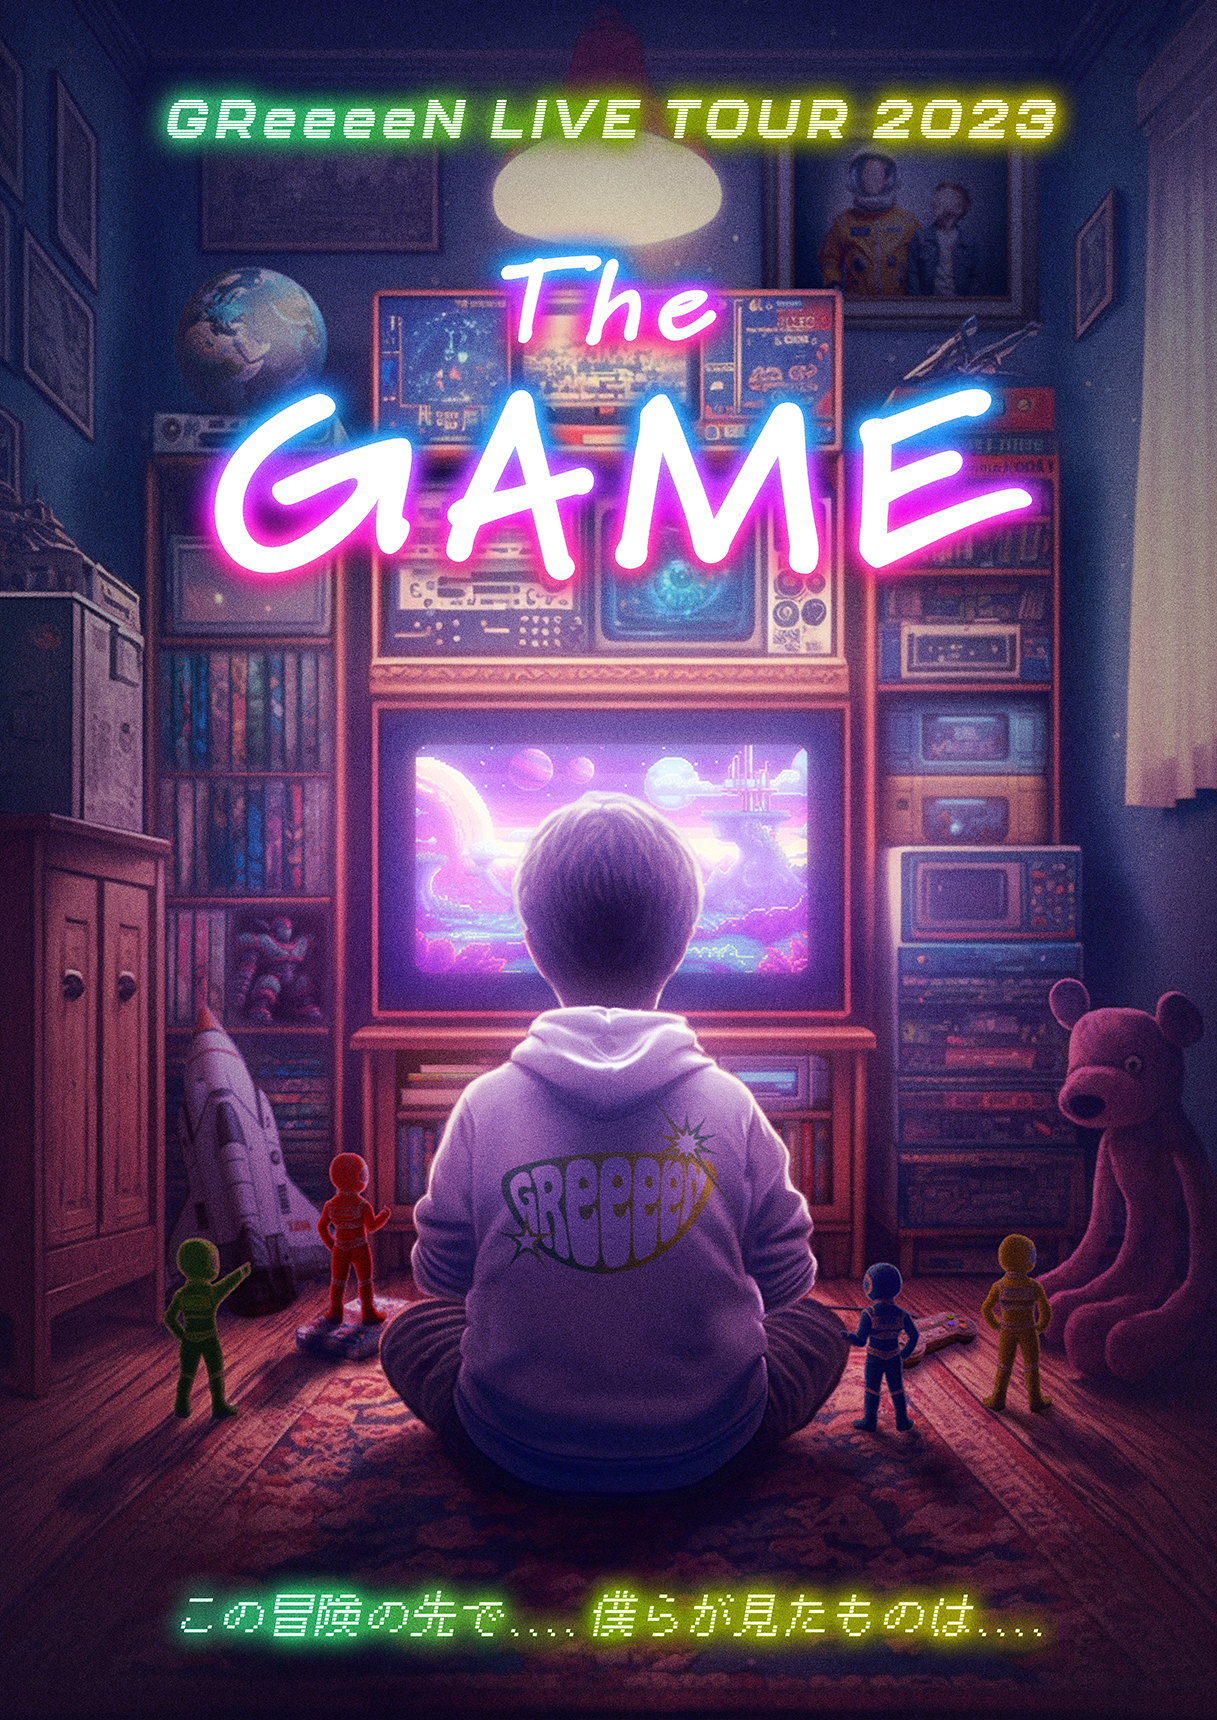 GReeeeN 2023年全国ツアー「“The GAME”」 開催決定